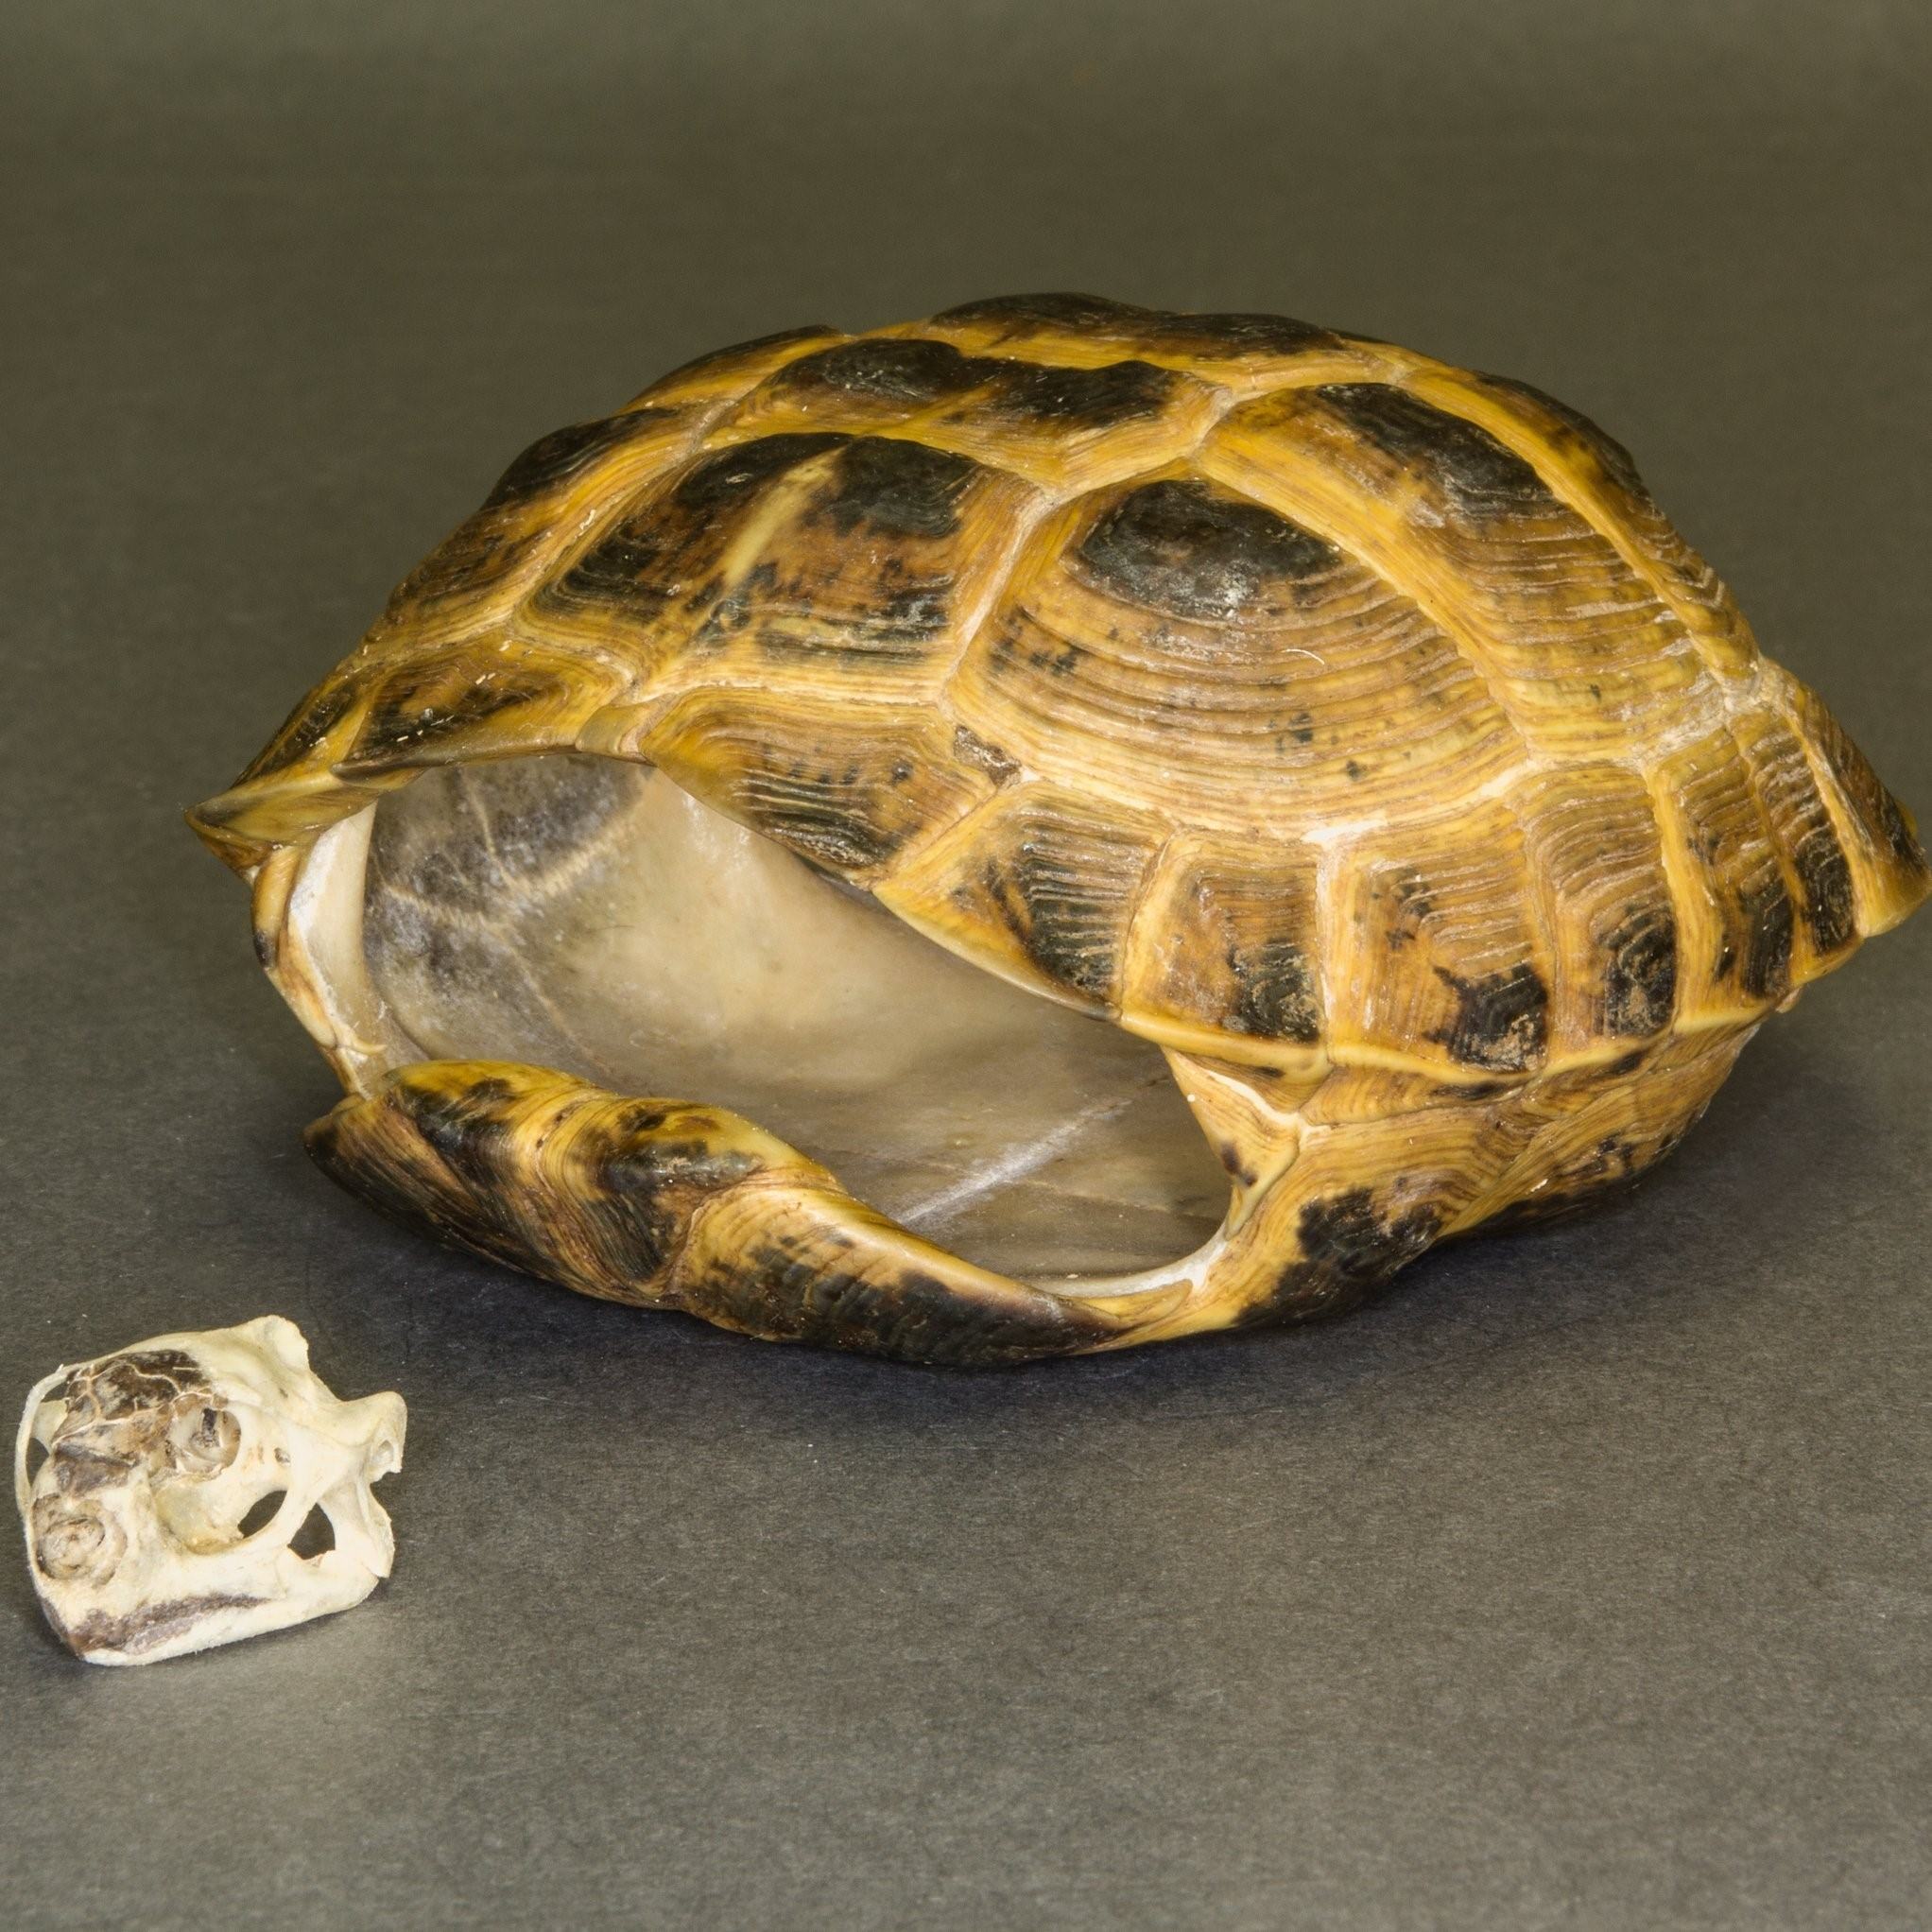 Turtle shell. Среднеазиатская черепаха панцирь. Панцирь сухопутной черепахи. Панцирь черепахи карапакс. Карапакс и пластрон.